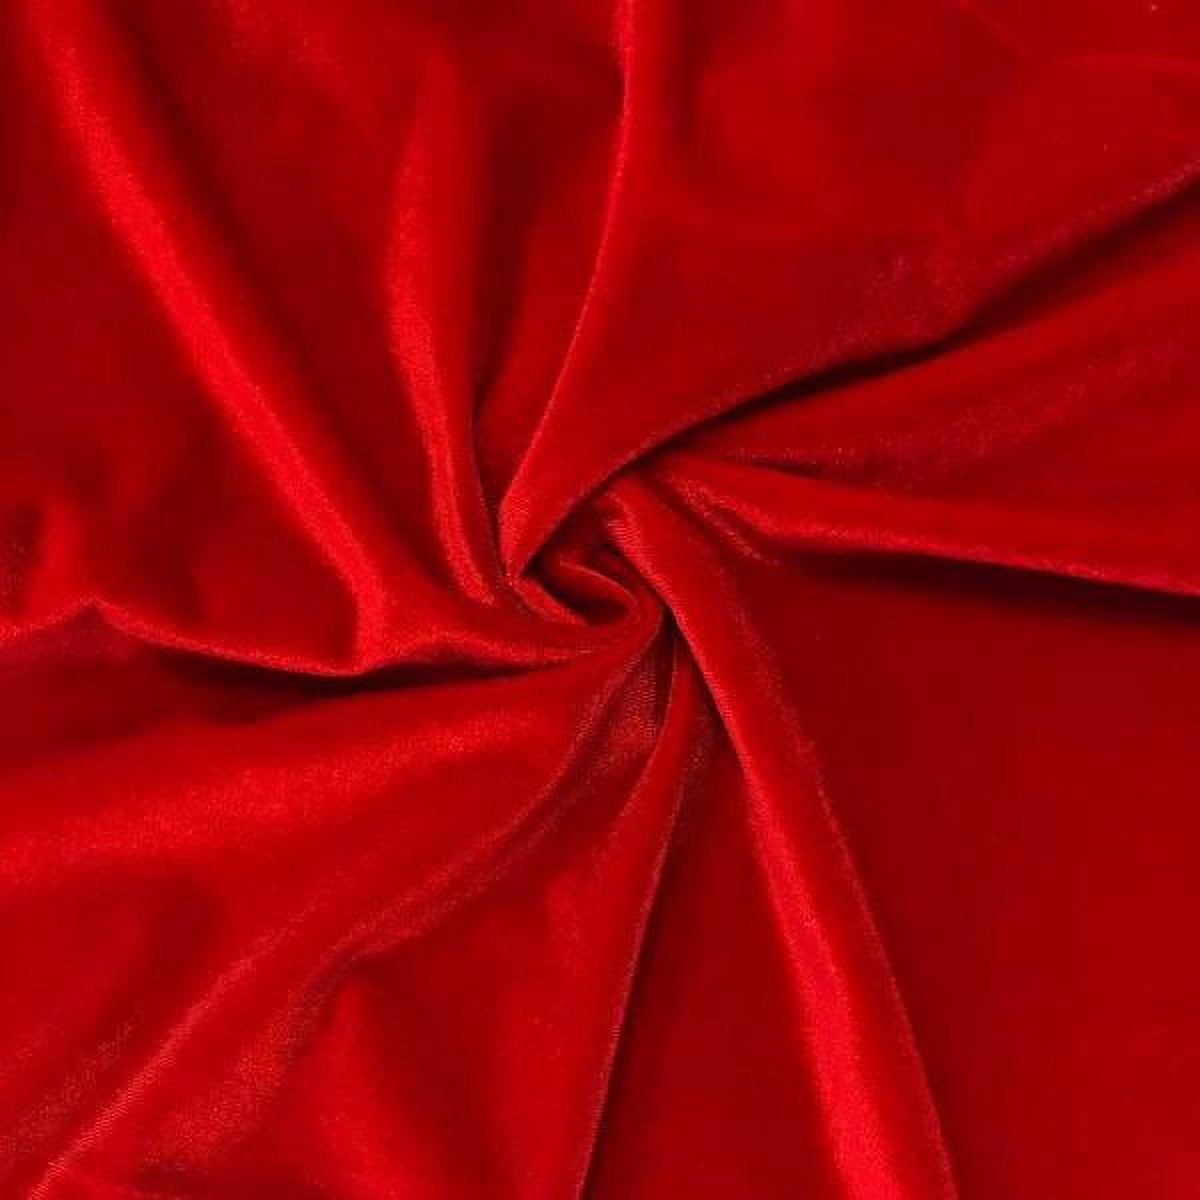 Red Stretch Velvet Fabric